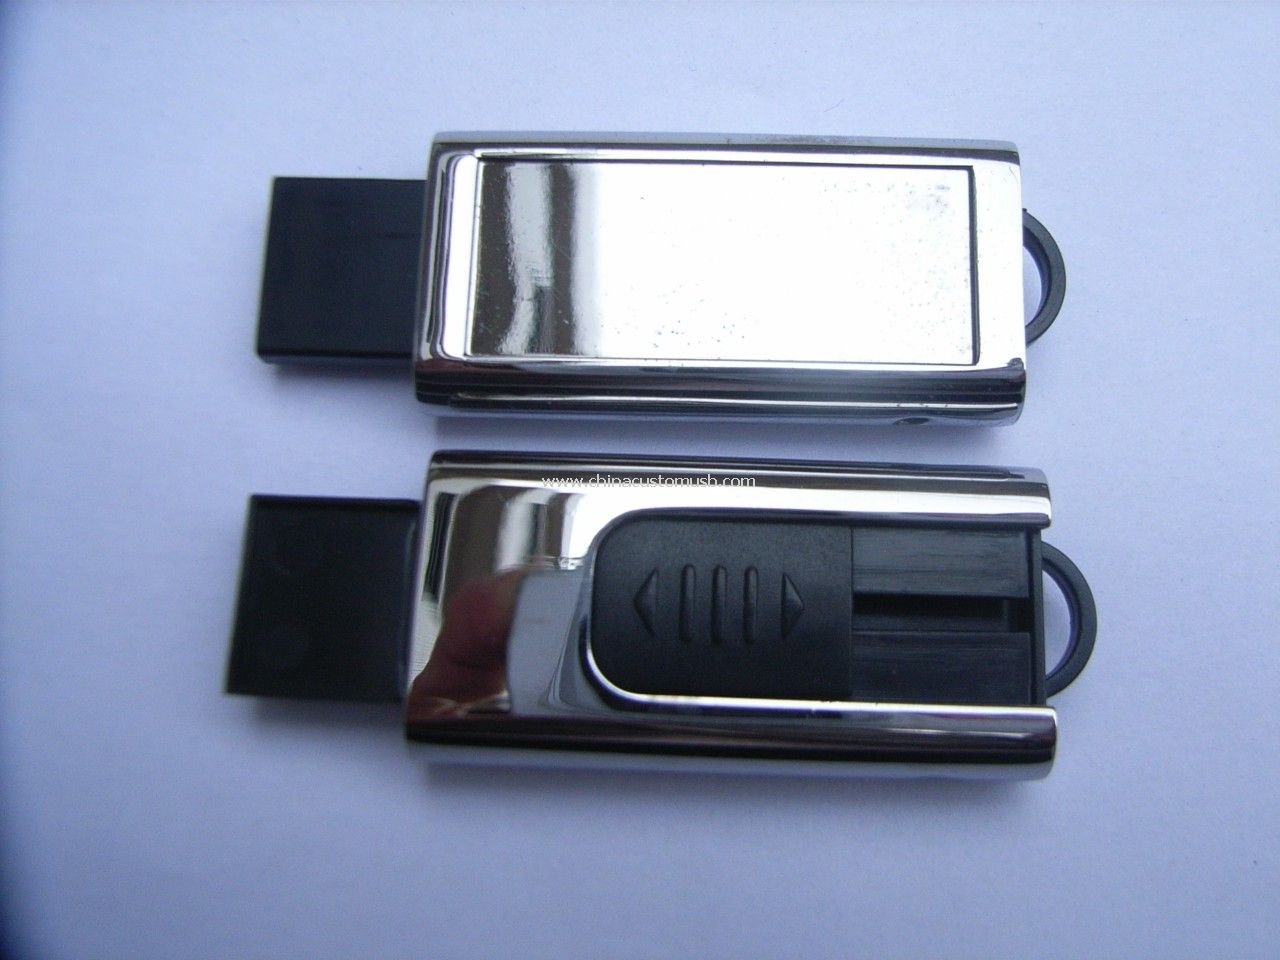 Mini push and pull USB drive